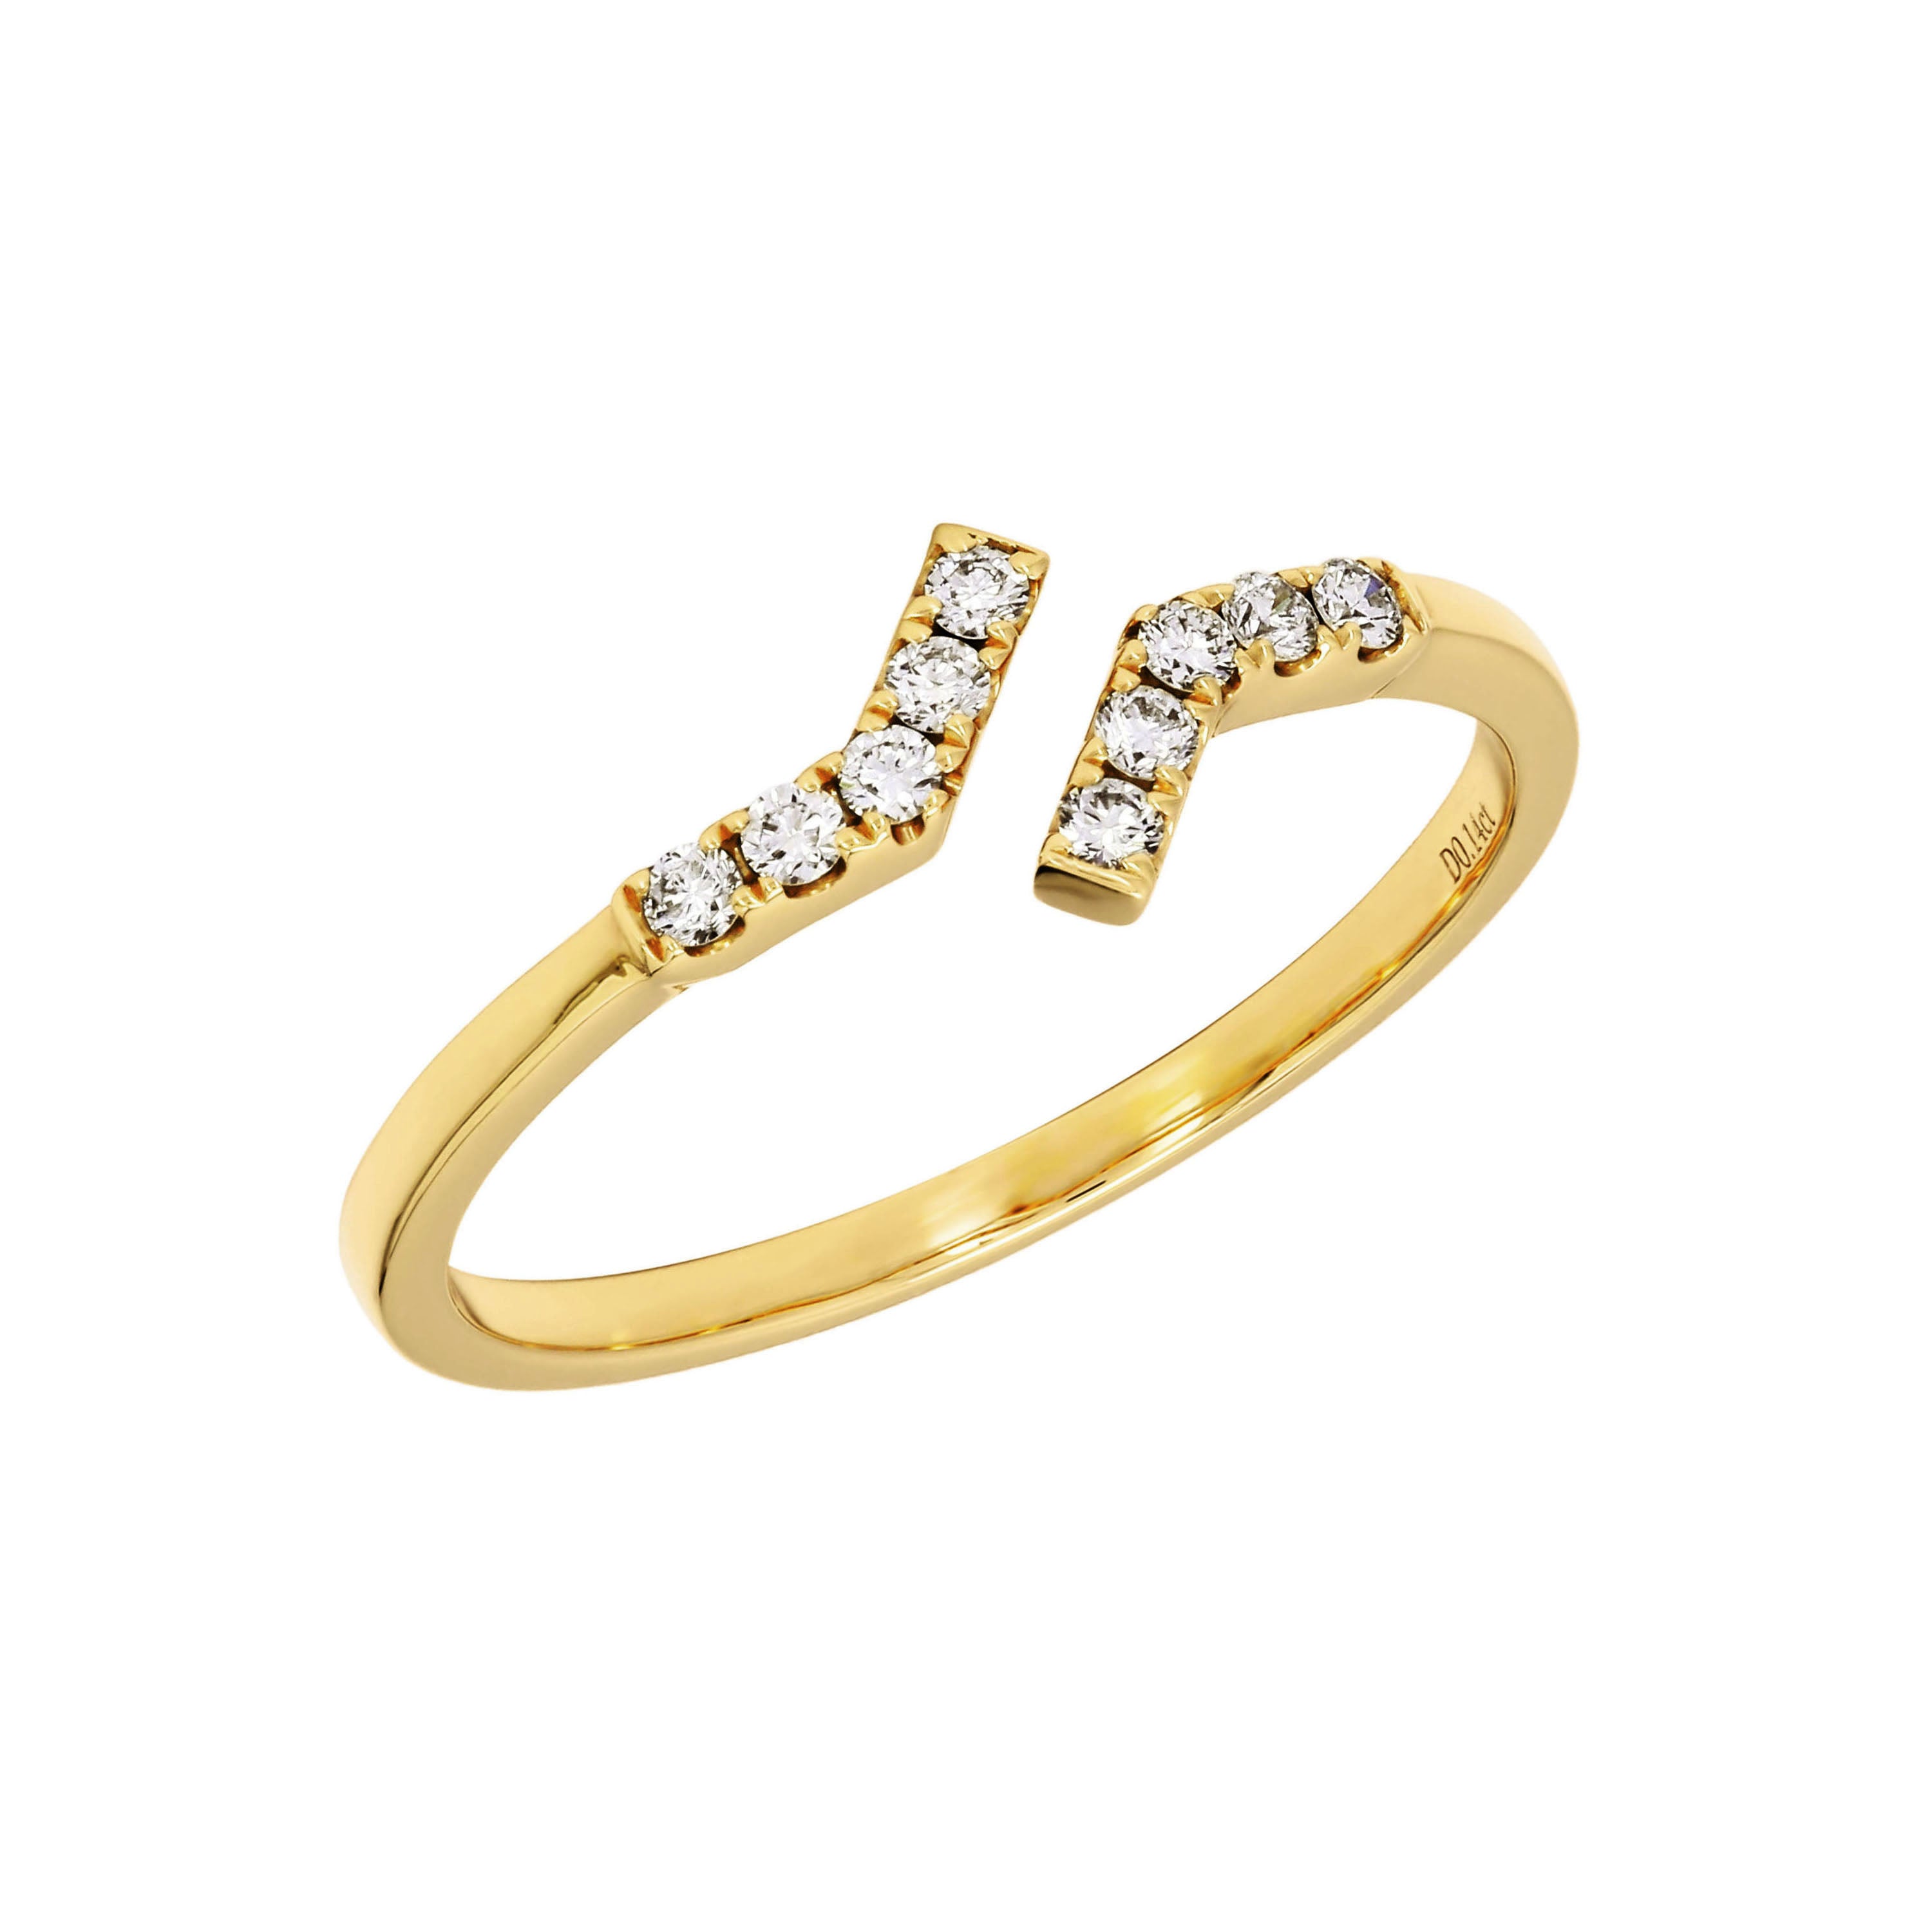 Adamar Jewels Beam Ring in 18K yellow gold set with diamonds